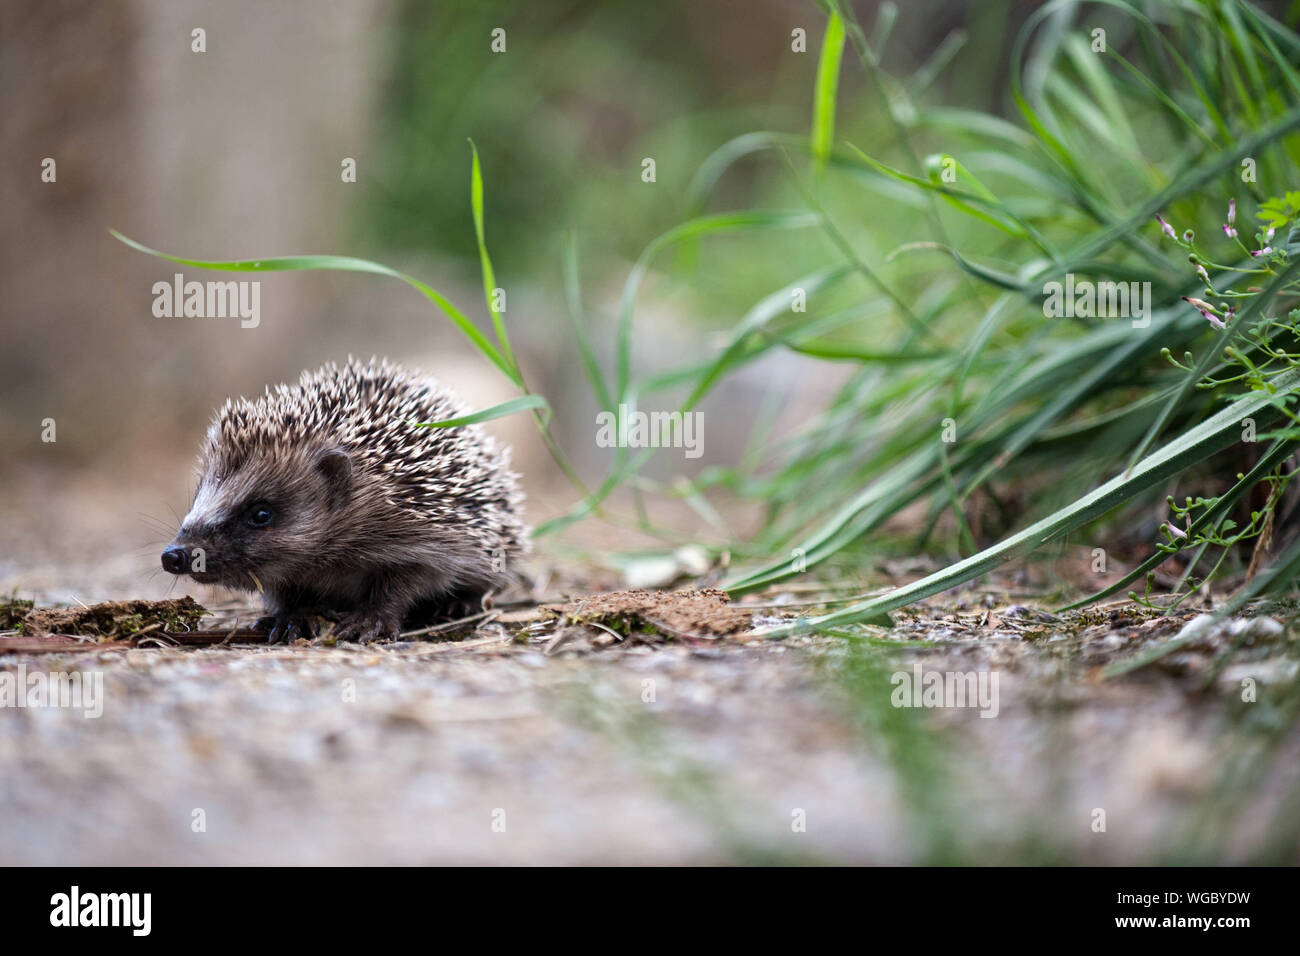 Hedgehog goes for a walk Stock Photo